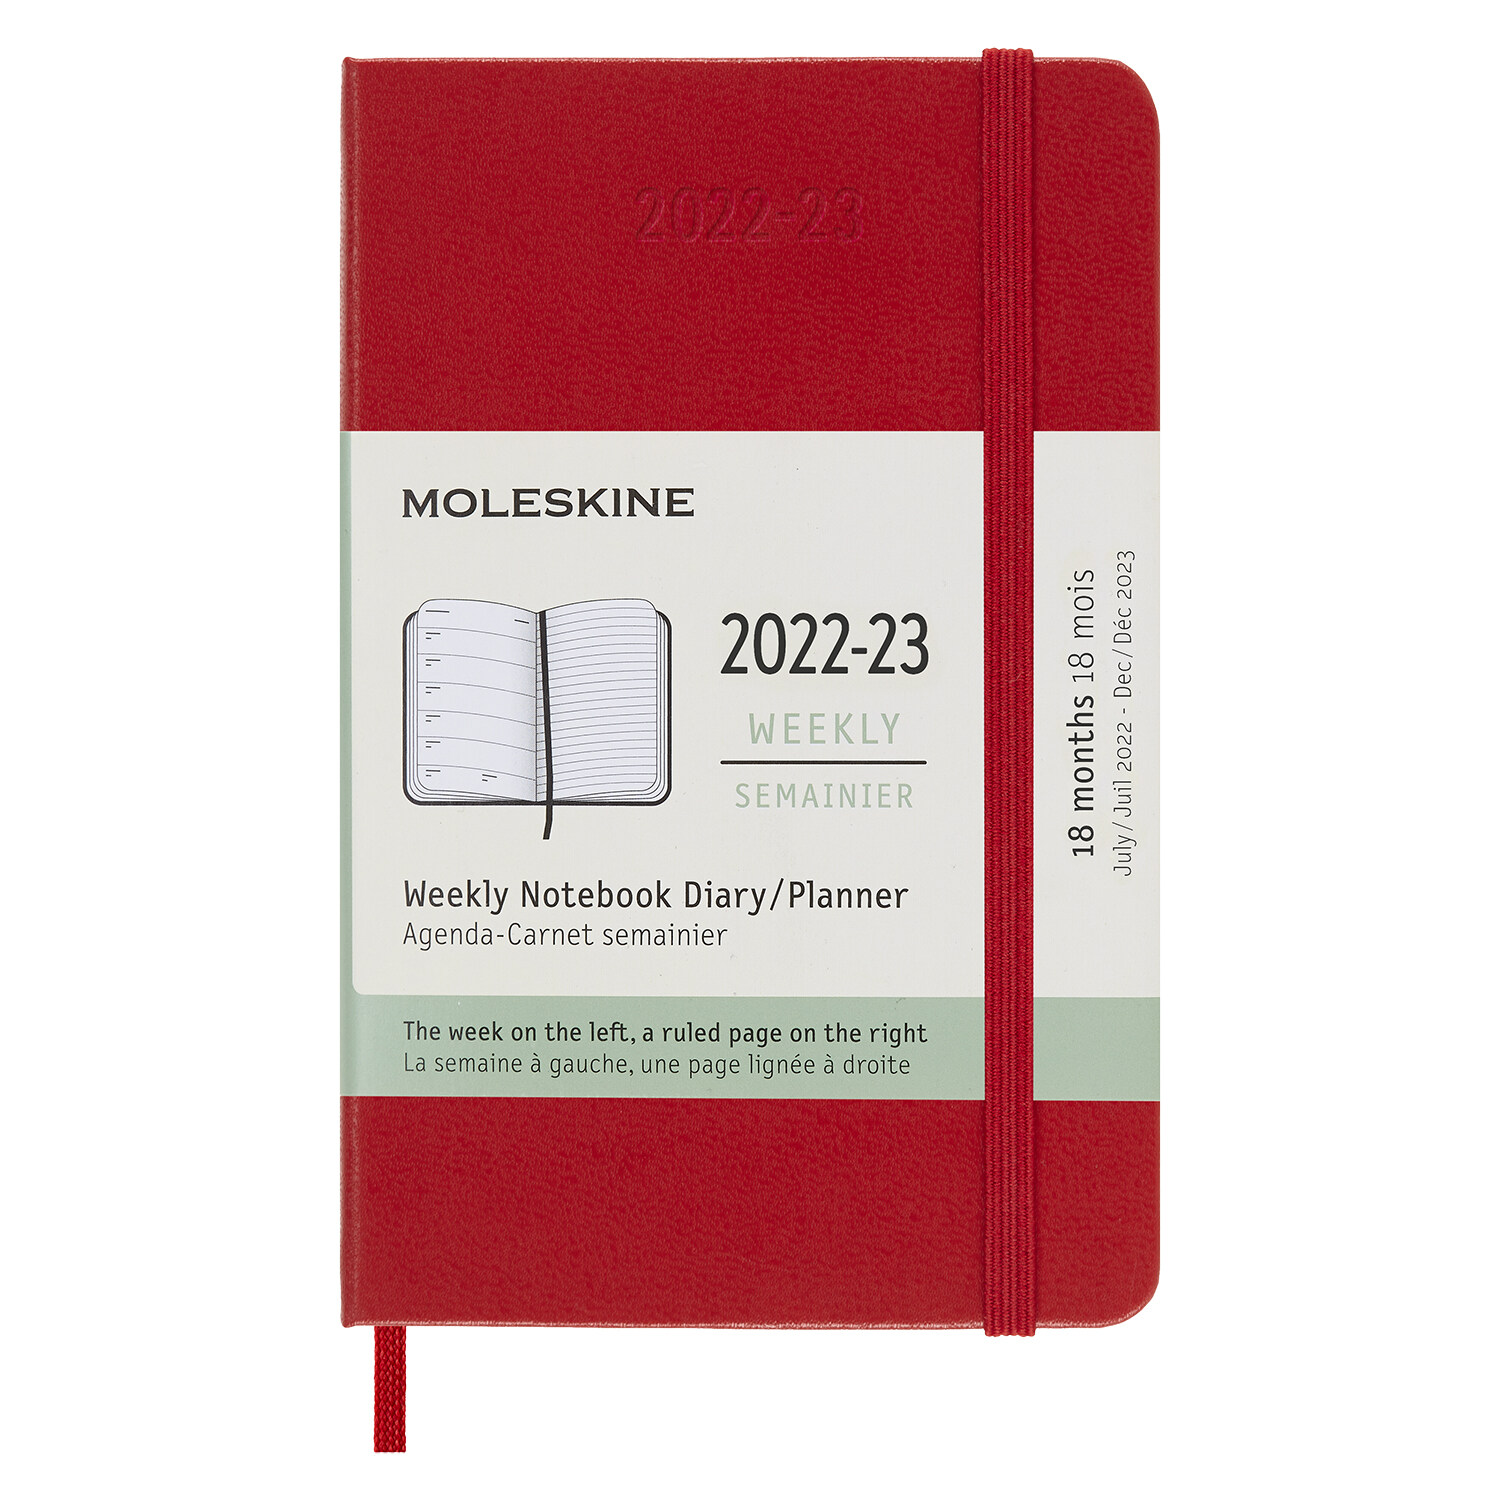 Moleskine 2023 Weekly Notebook Planner, 18m, Pocket, Scarlet Red, Hard Cover (3.5 X 5.5) (Other)